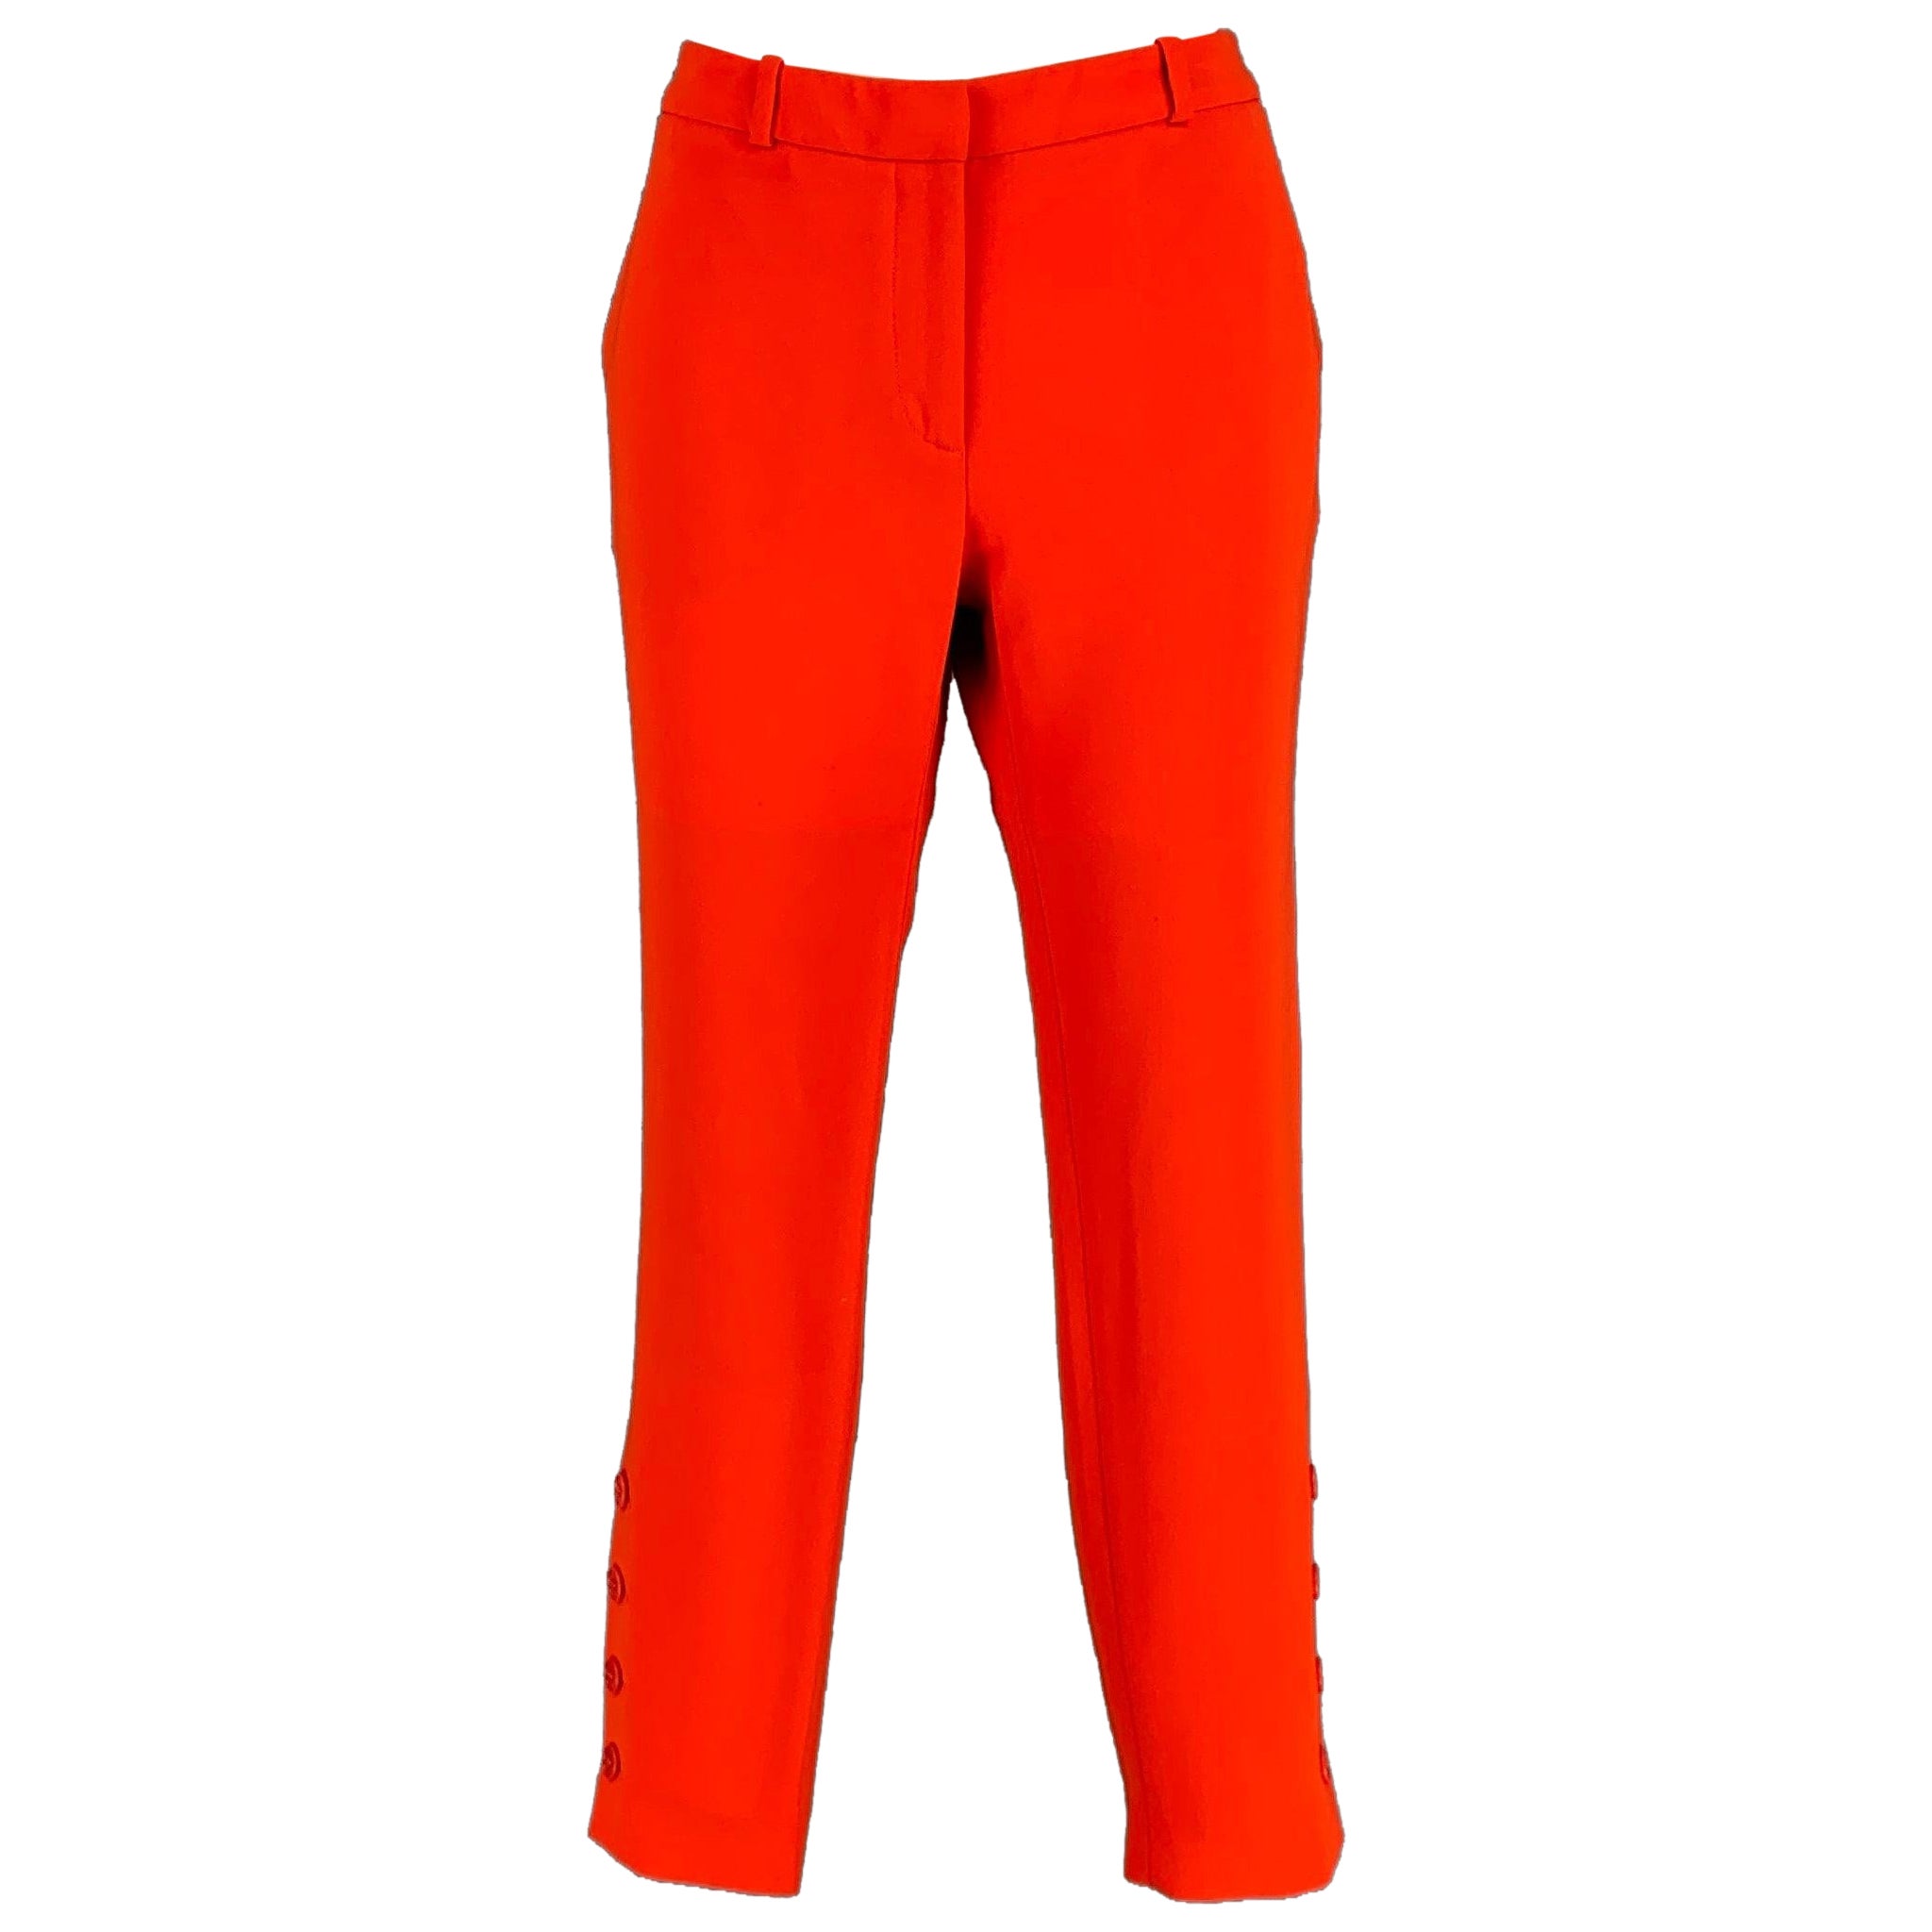 ALTUZARRA Size 4 Orange Triacetate Blend Dress Pants For Sale